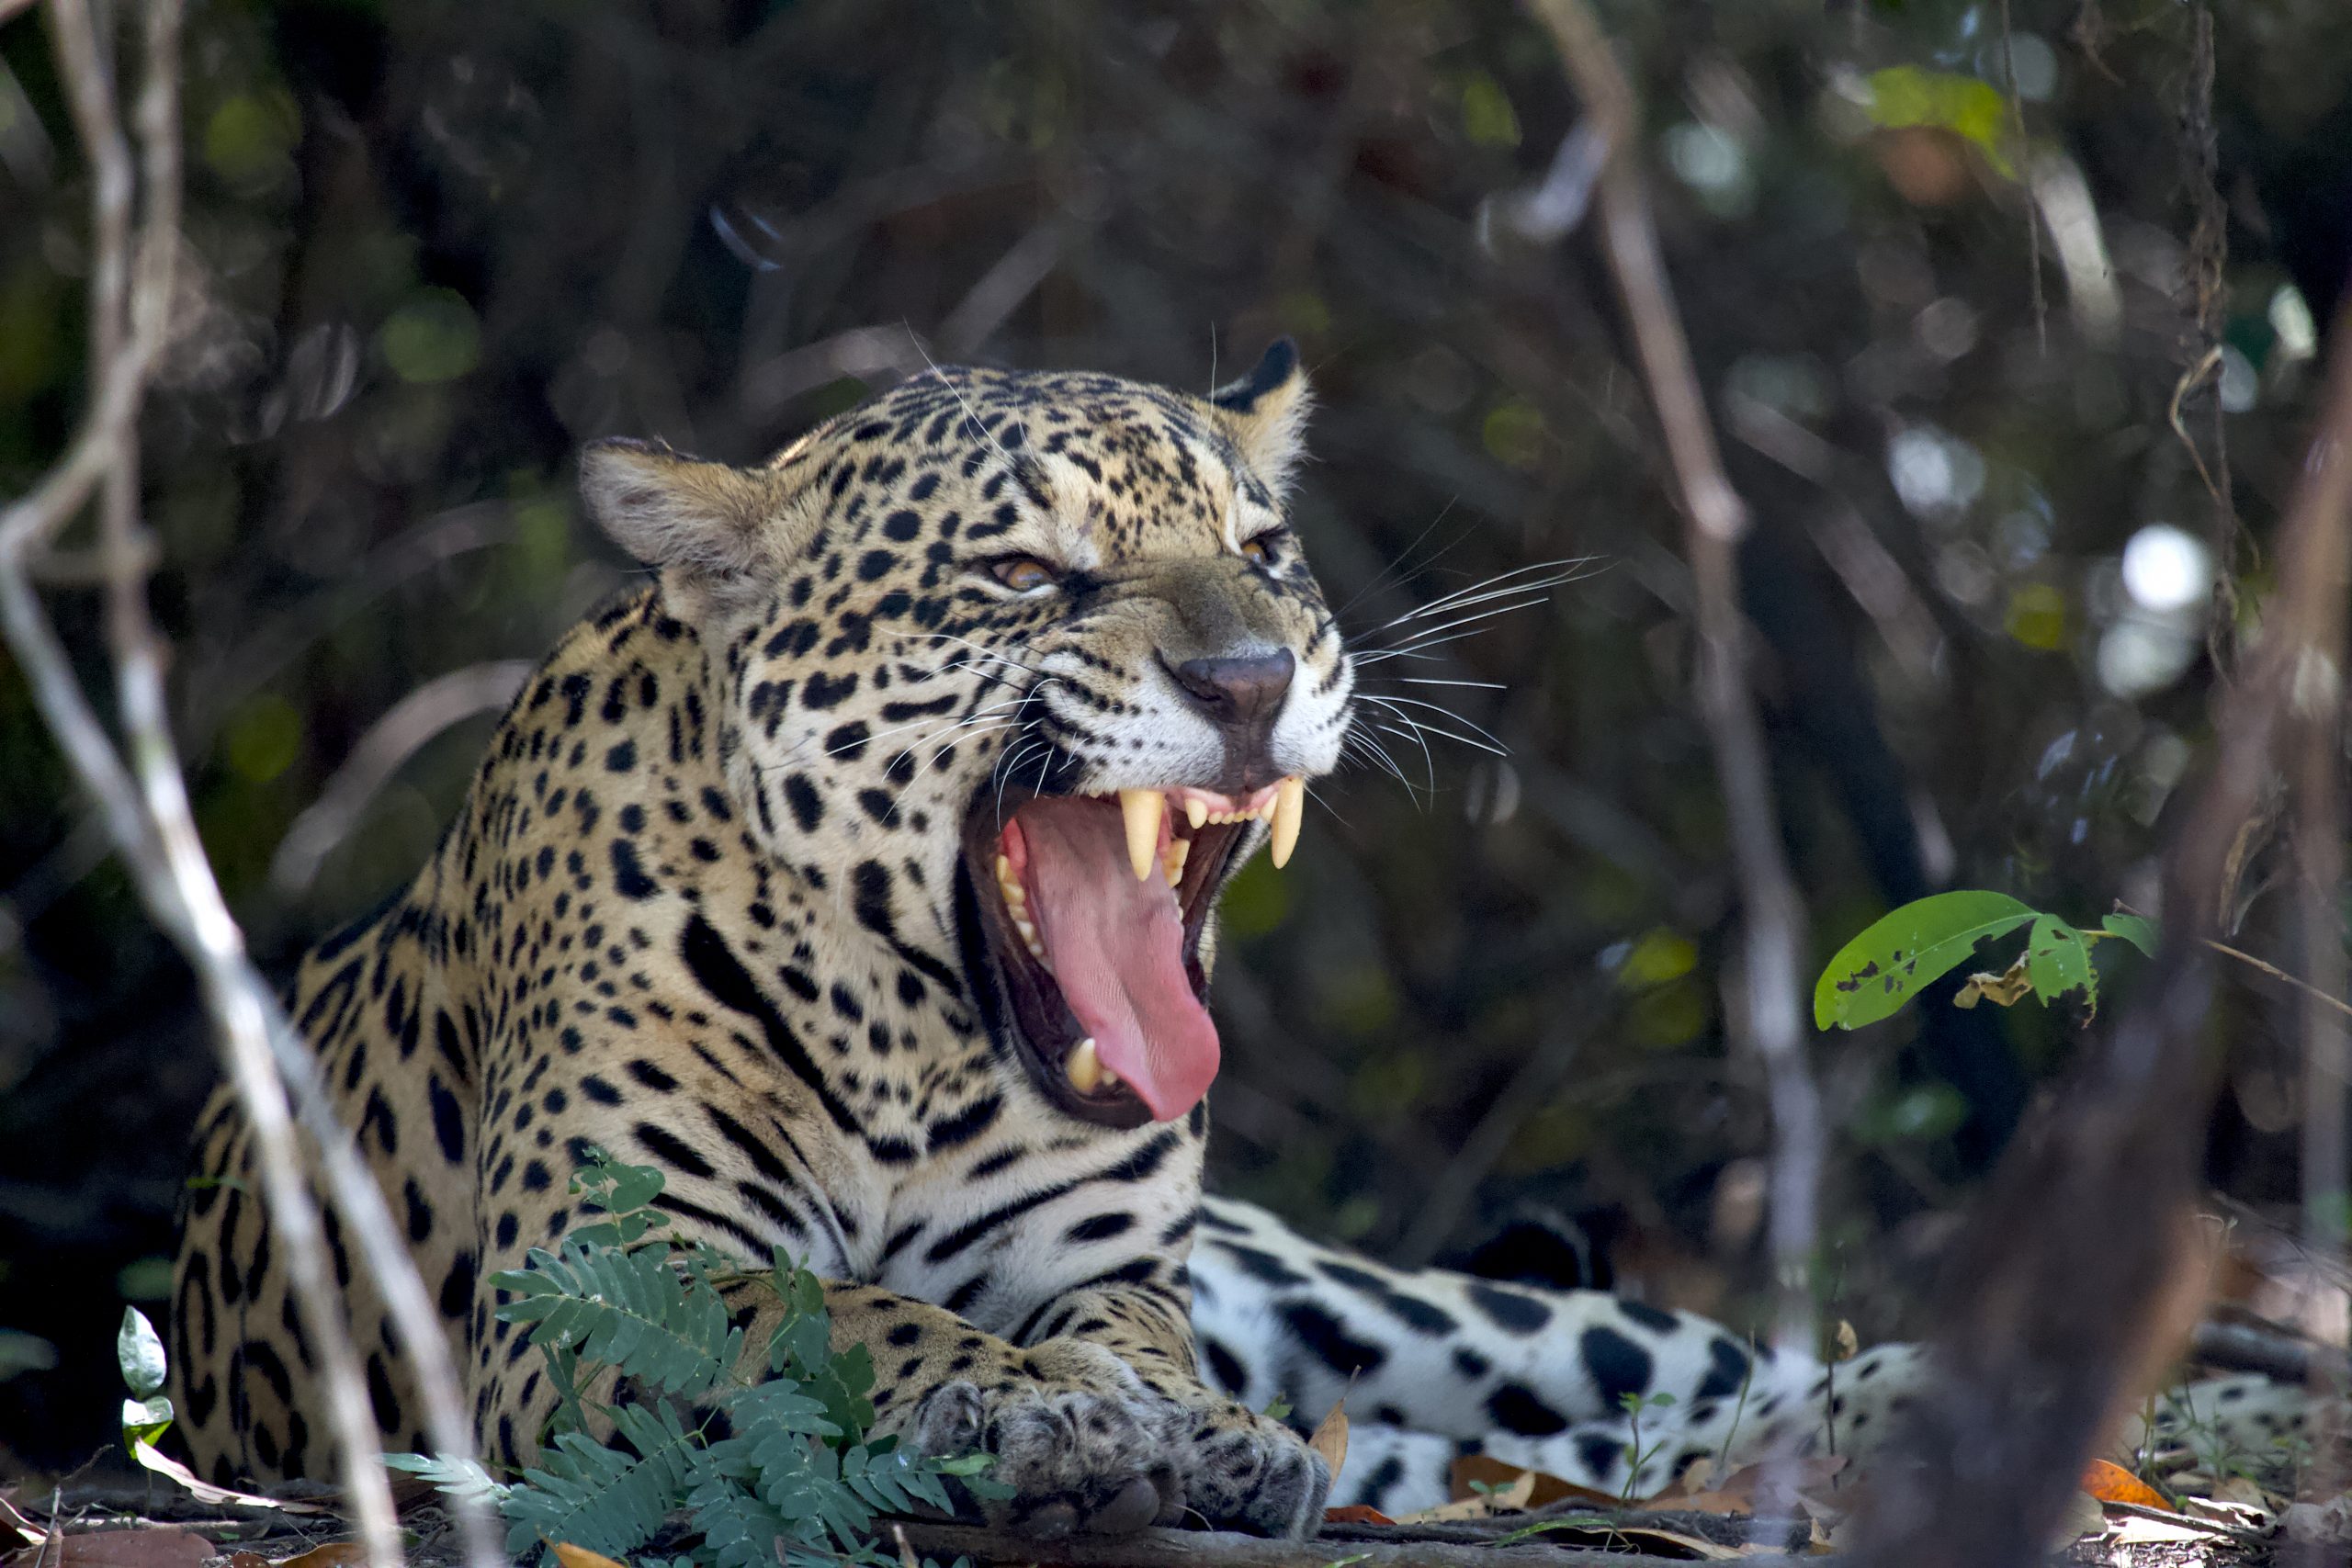 Jaguar roaring, Pantanal, Brazil.